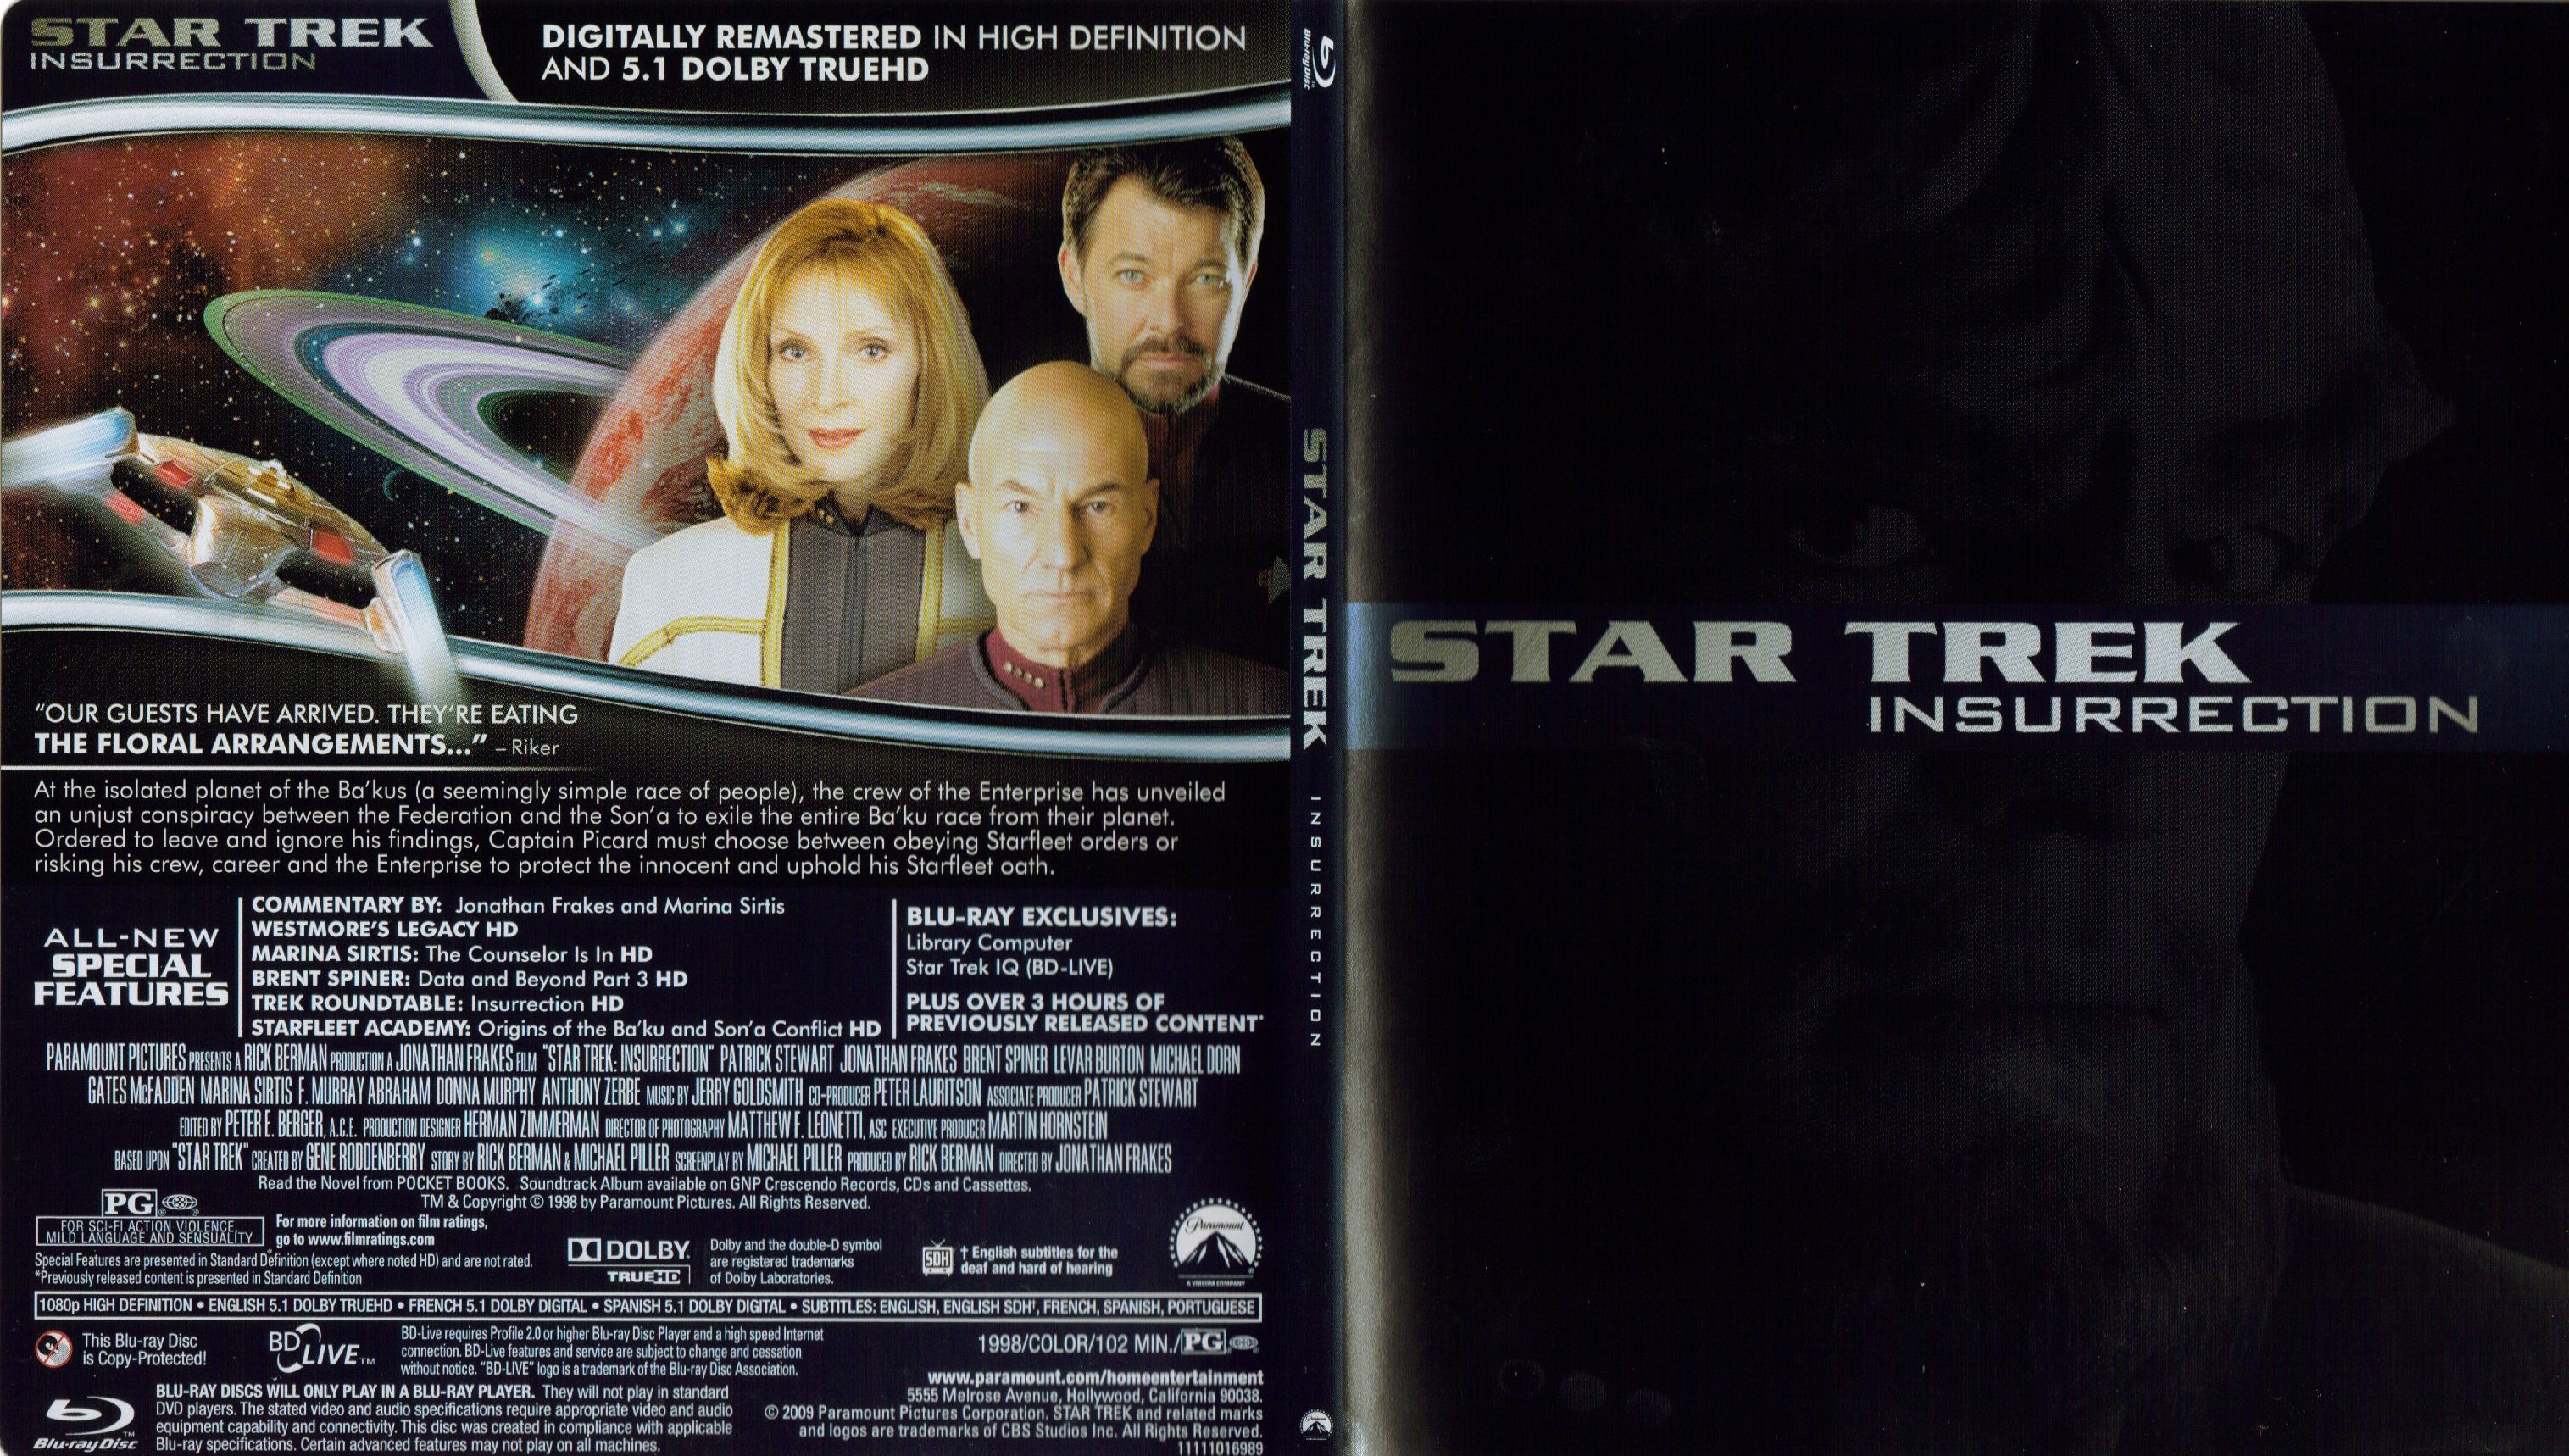 Jaquette DVD Star Trek Insurrection - SLIM Zone 1 (BLU-RAY)